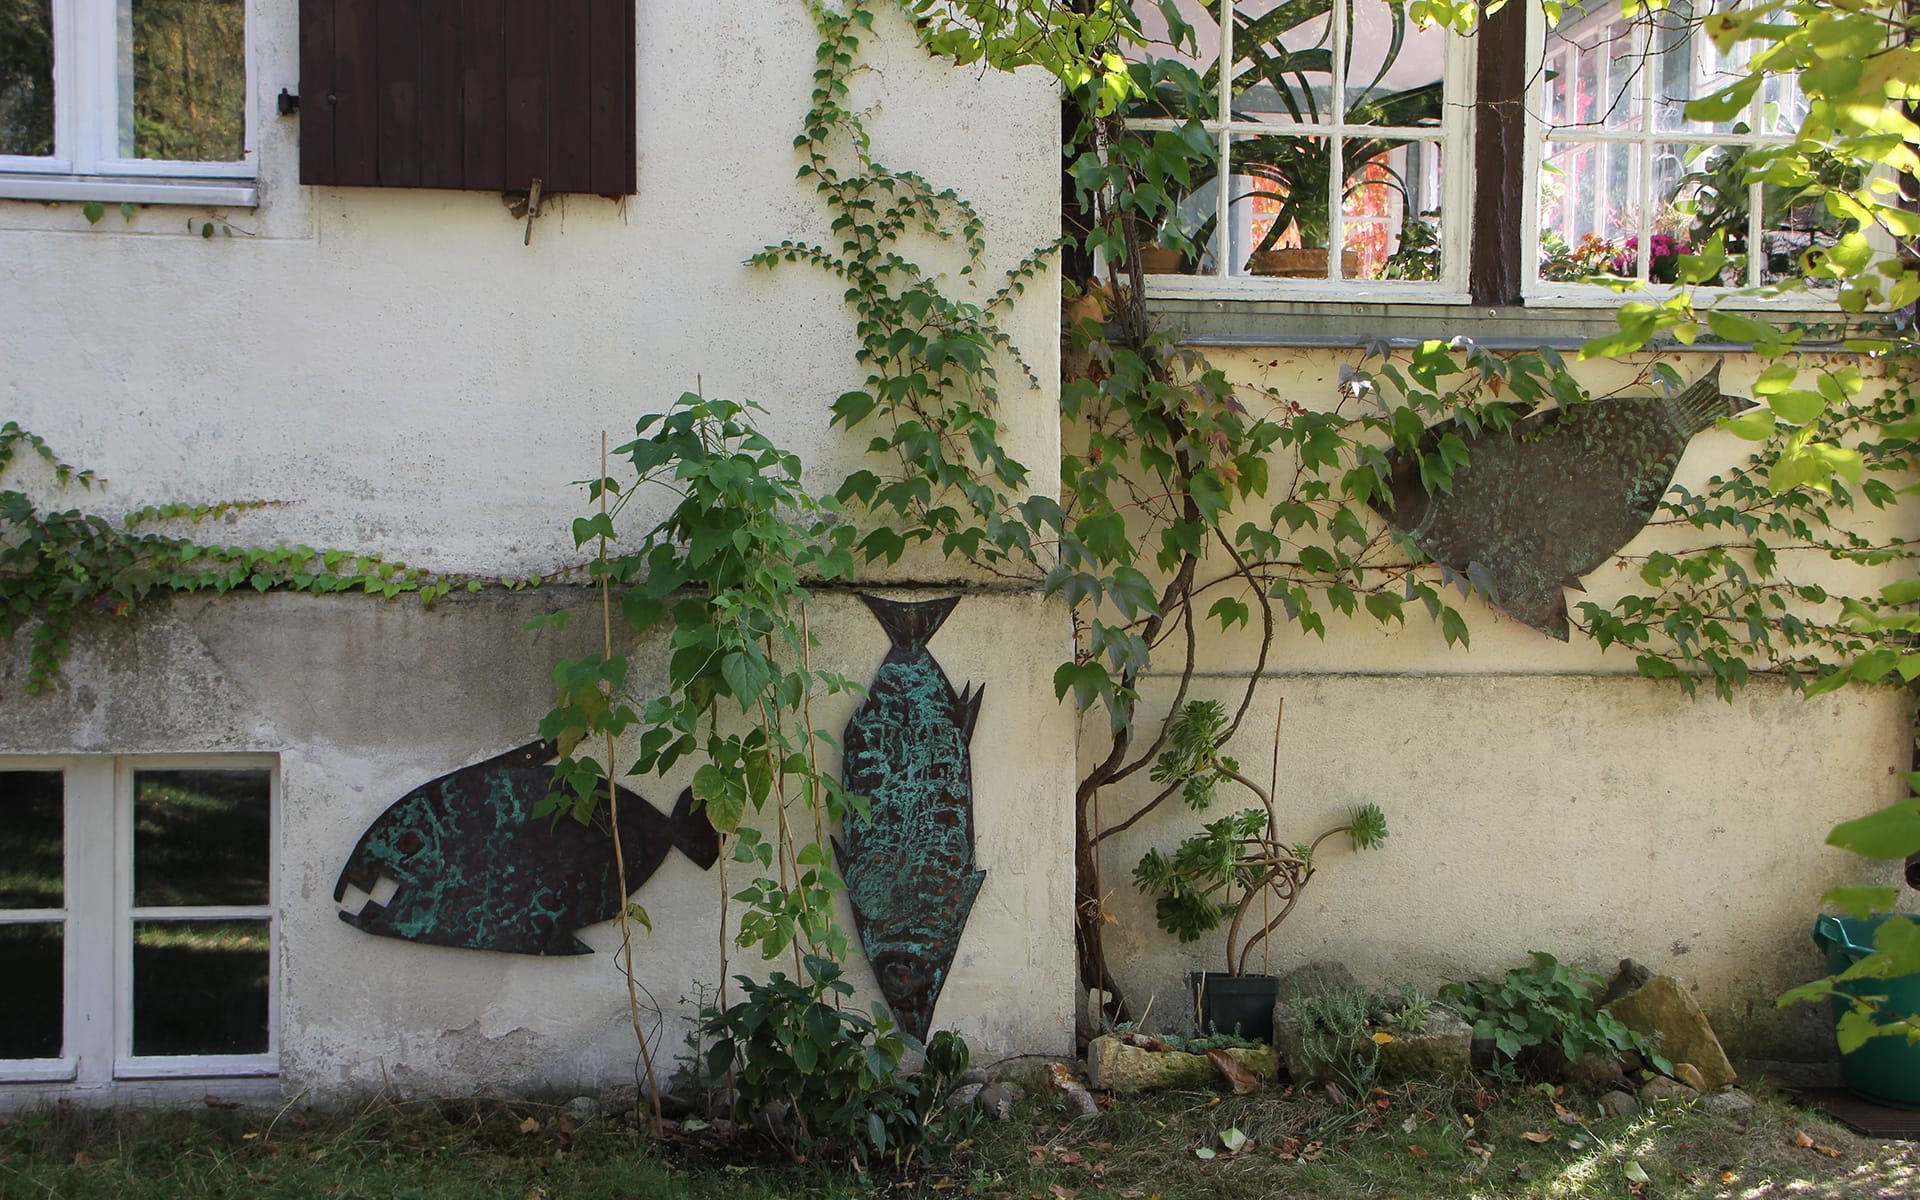 Kunsttour Stechlin - Fisch Skulpturen an der Wand im Künstlergarten